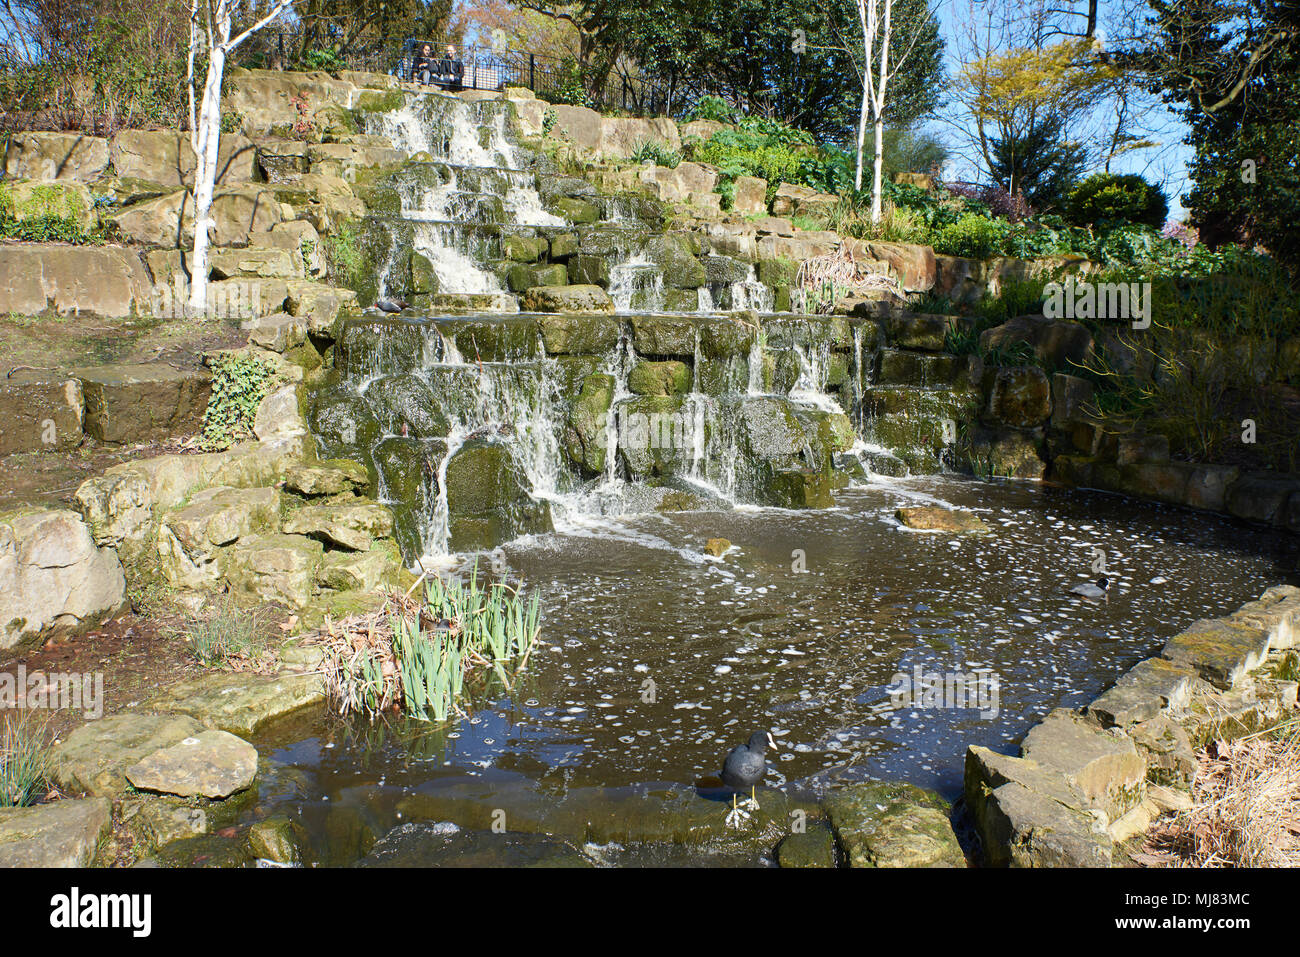 Regent's park waterfall Stock Photo - Alamy